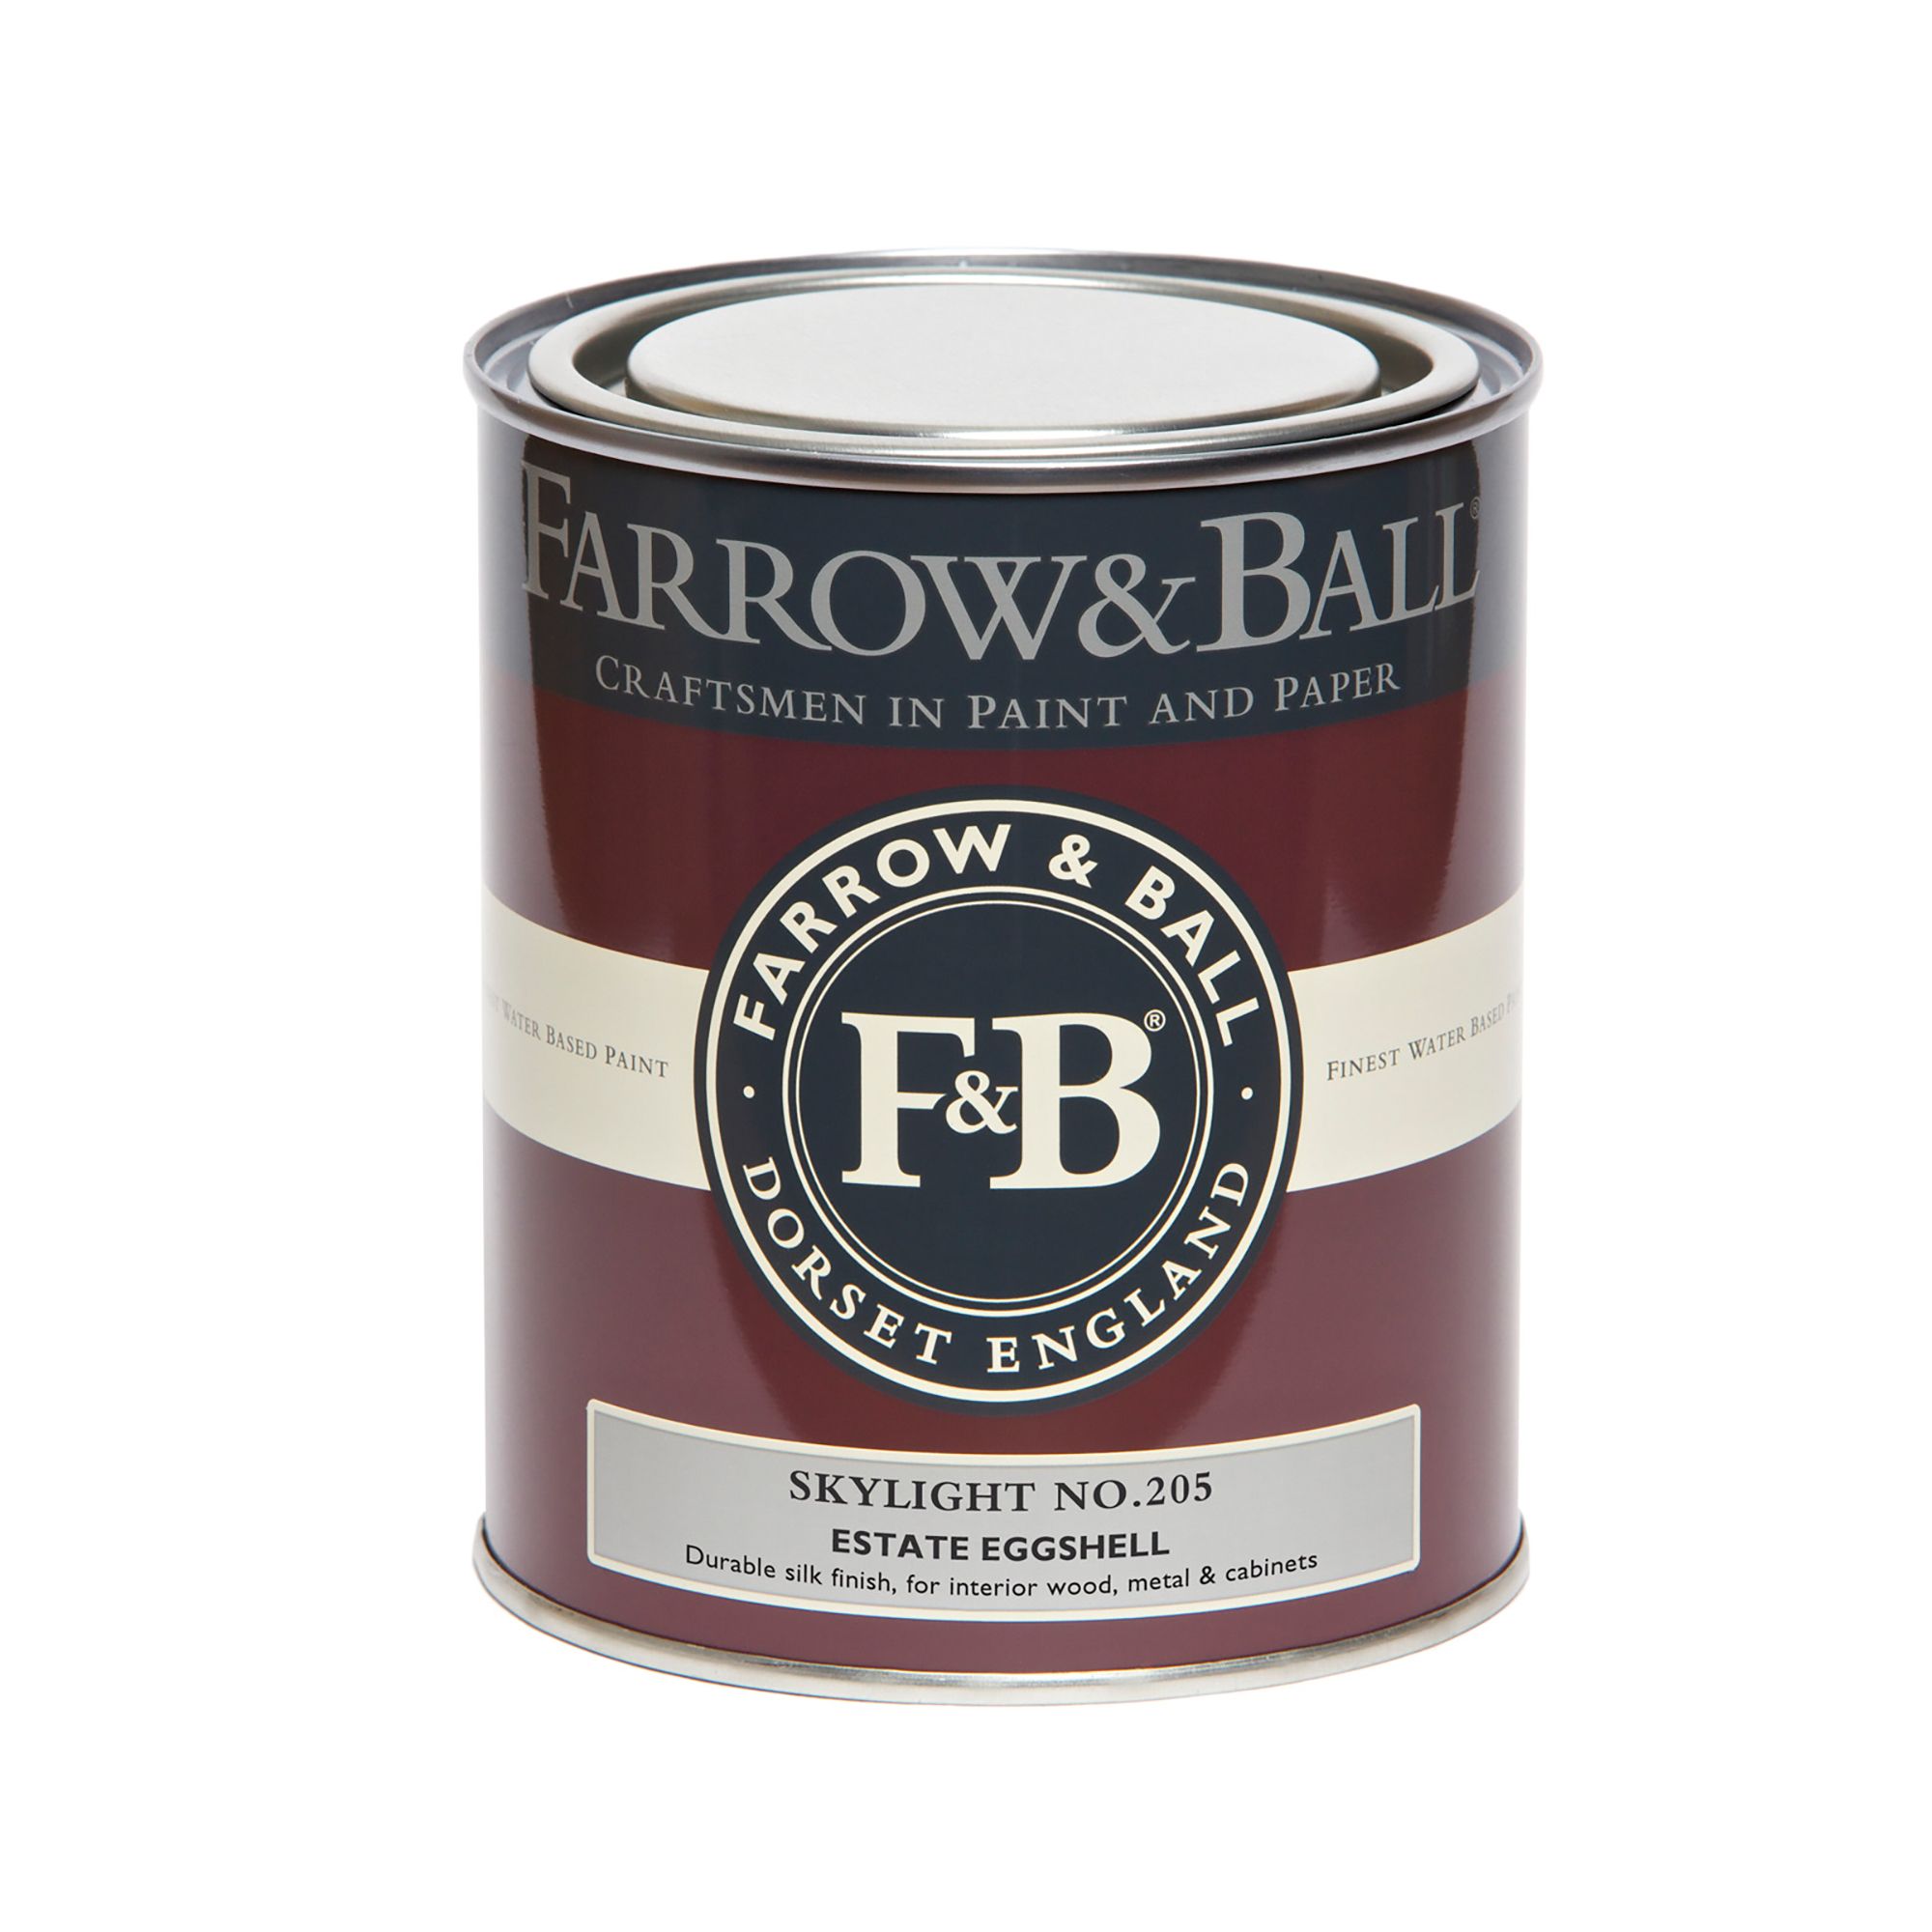 Farrow & Ball Estate Skylight No.205 Eggshell Paint, 750ml